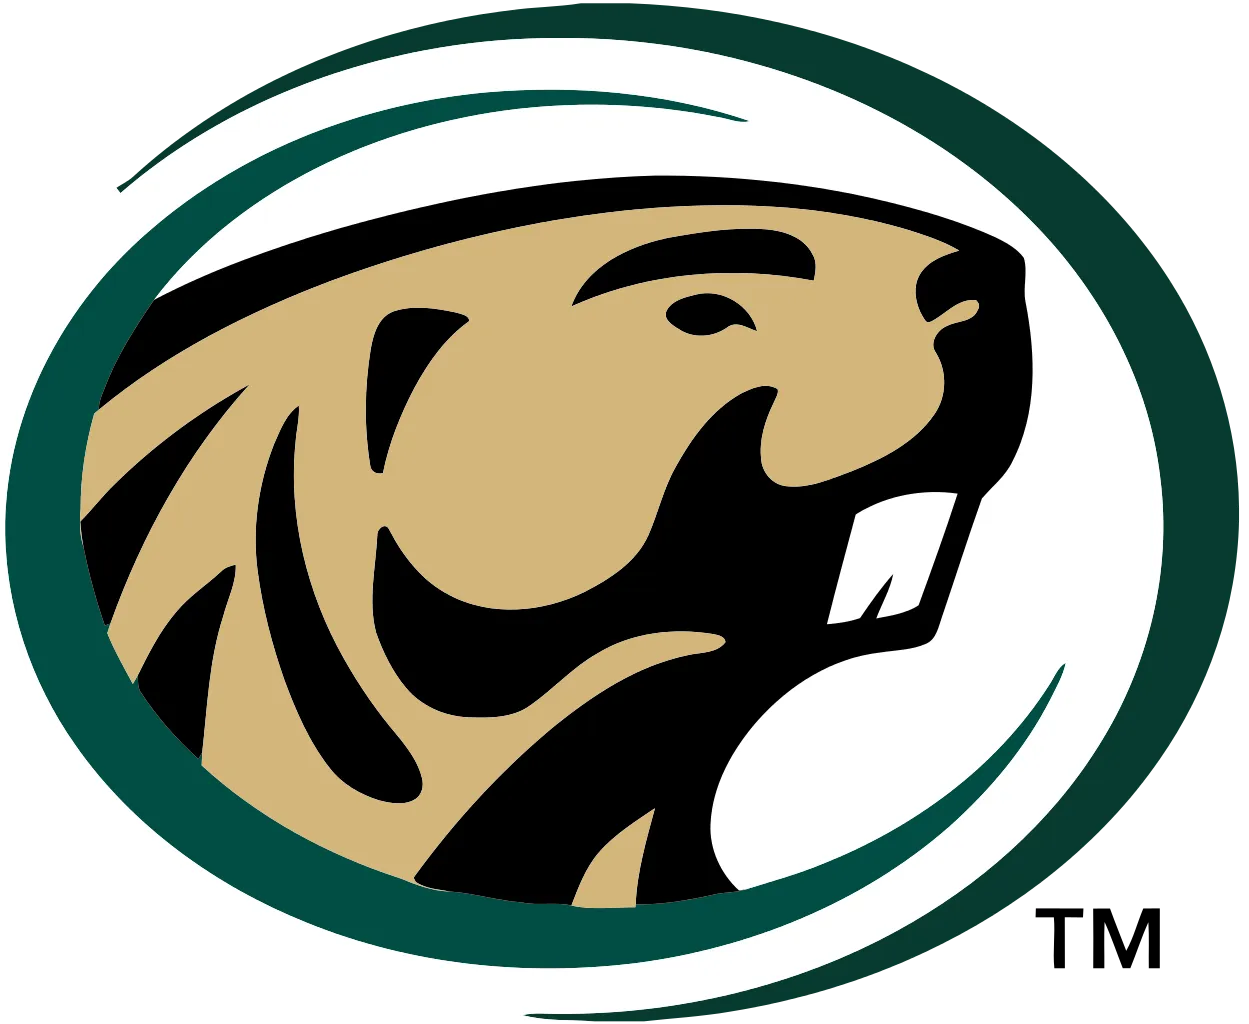 bemidji-state-beavers-logo